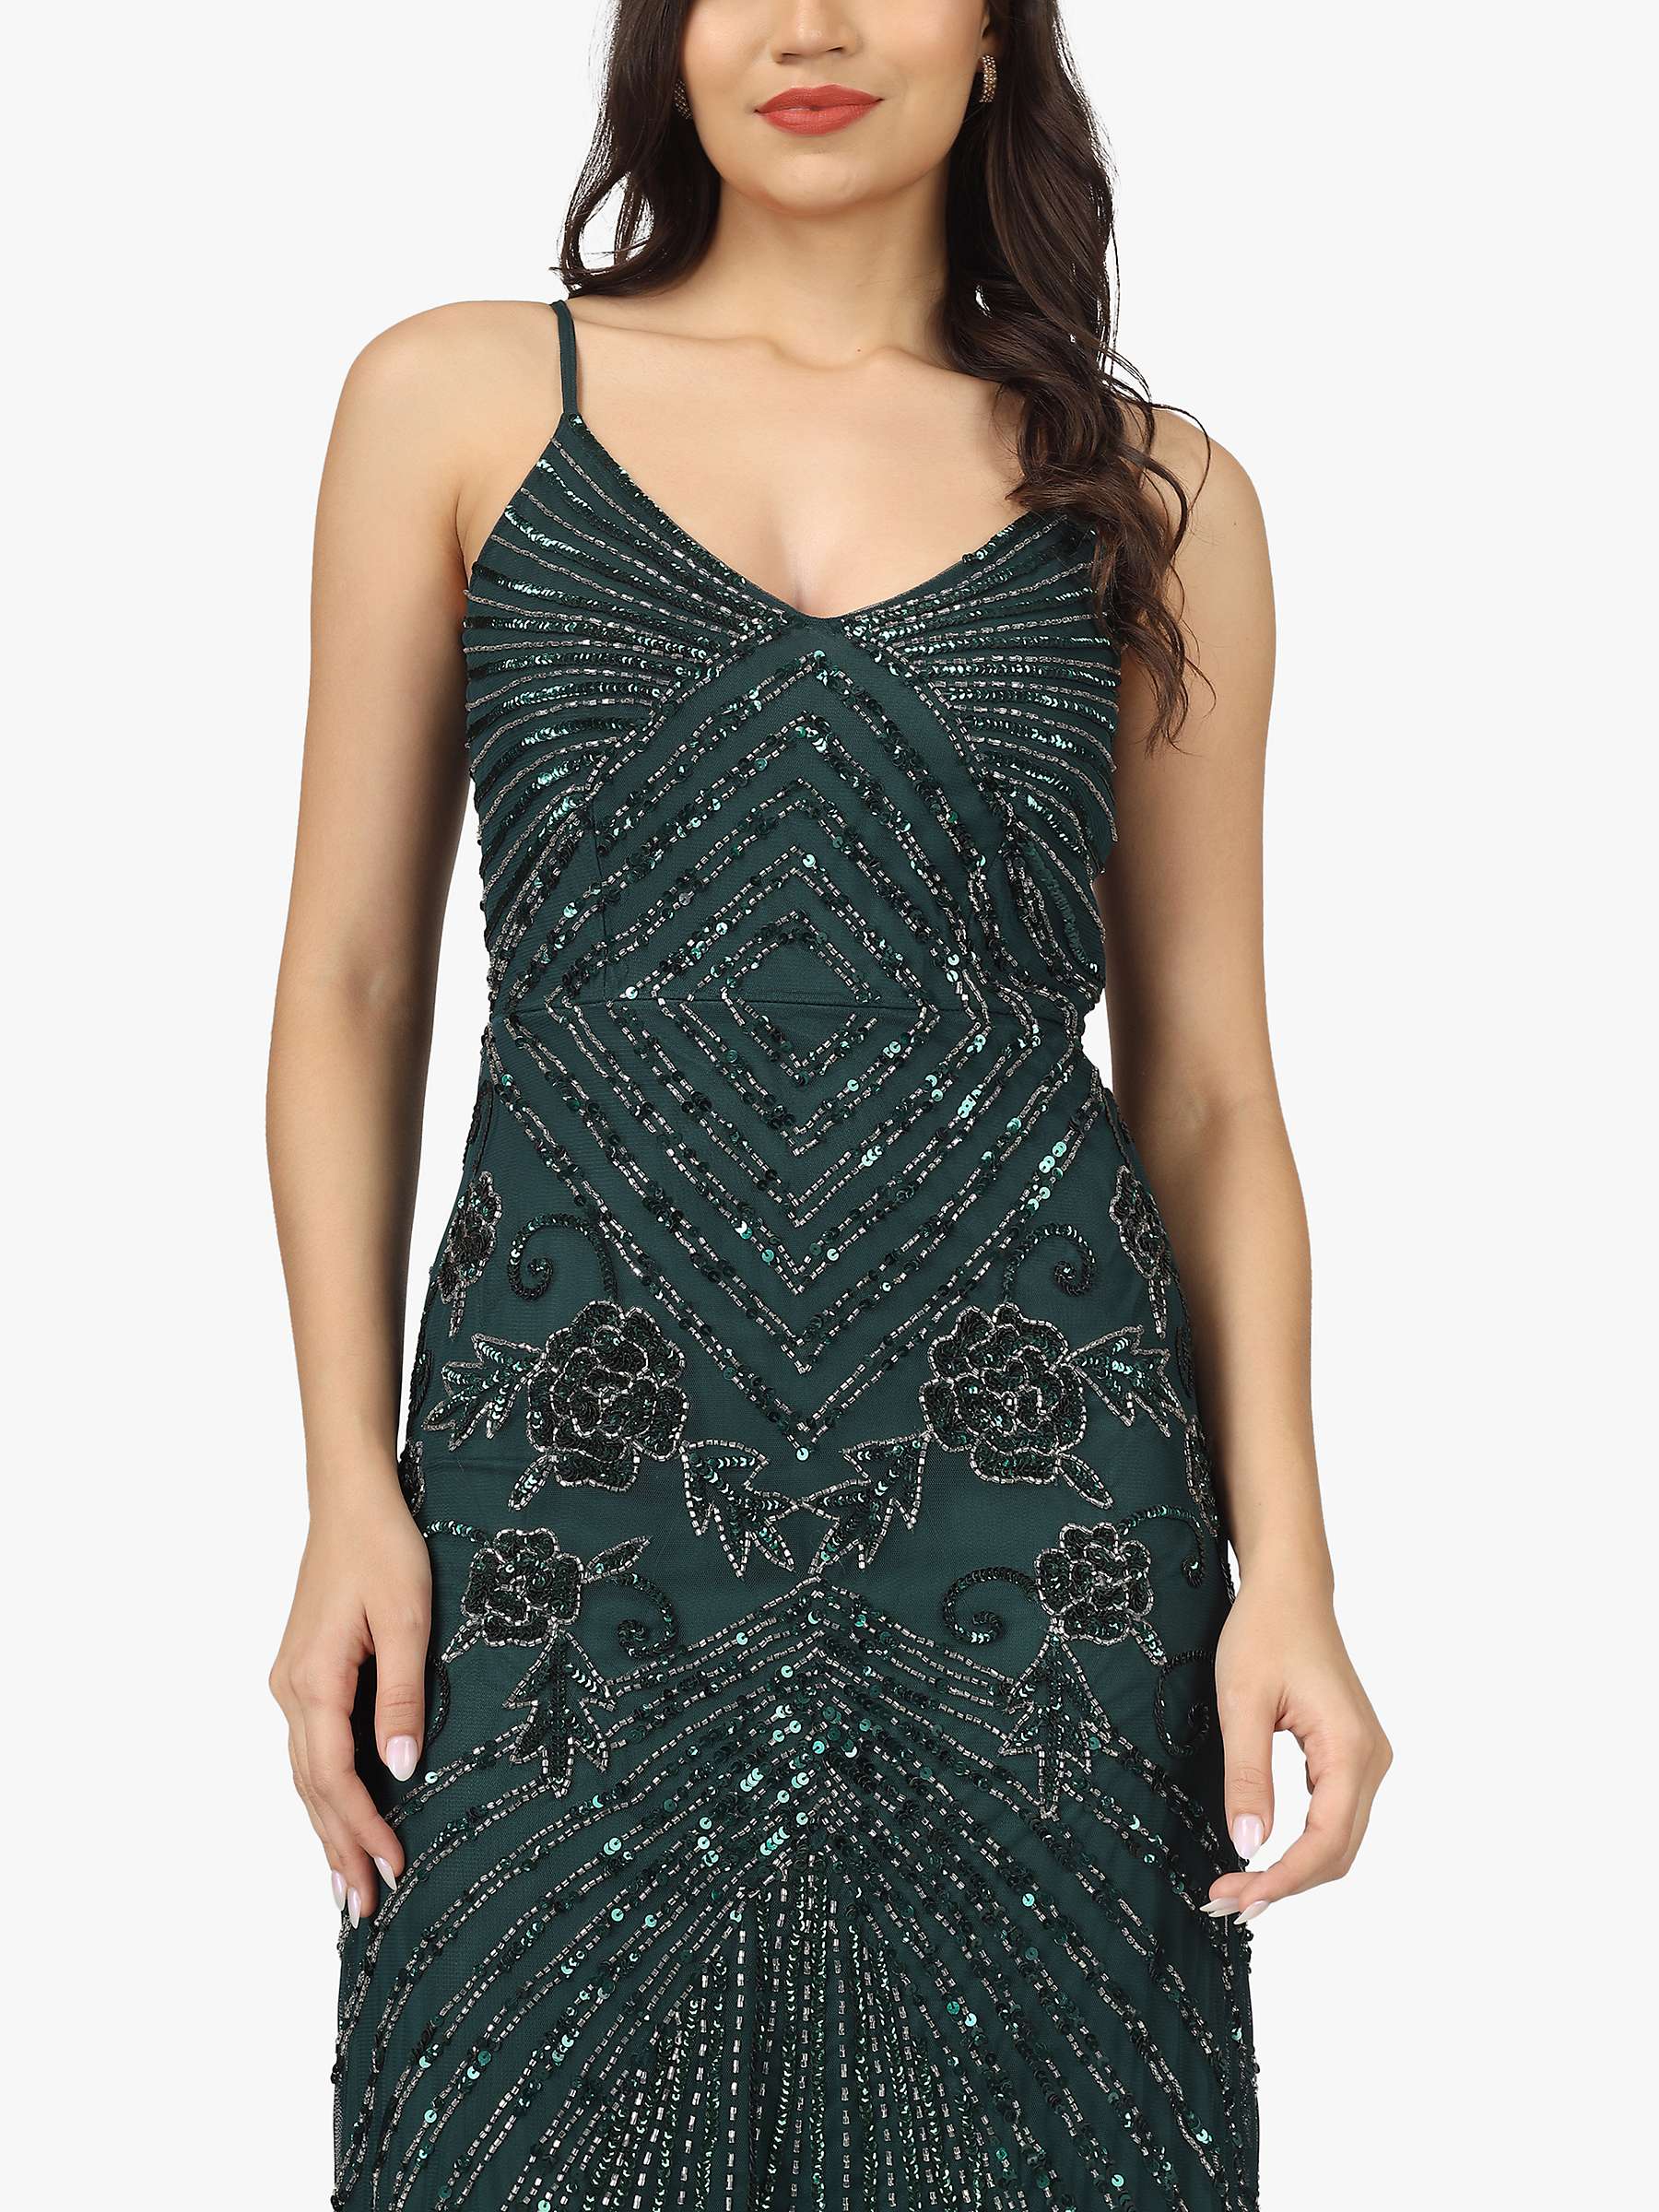 Buy Lace & Beads Sara Embellished Maxi Dress Online at johnlewis.com